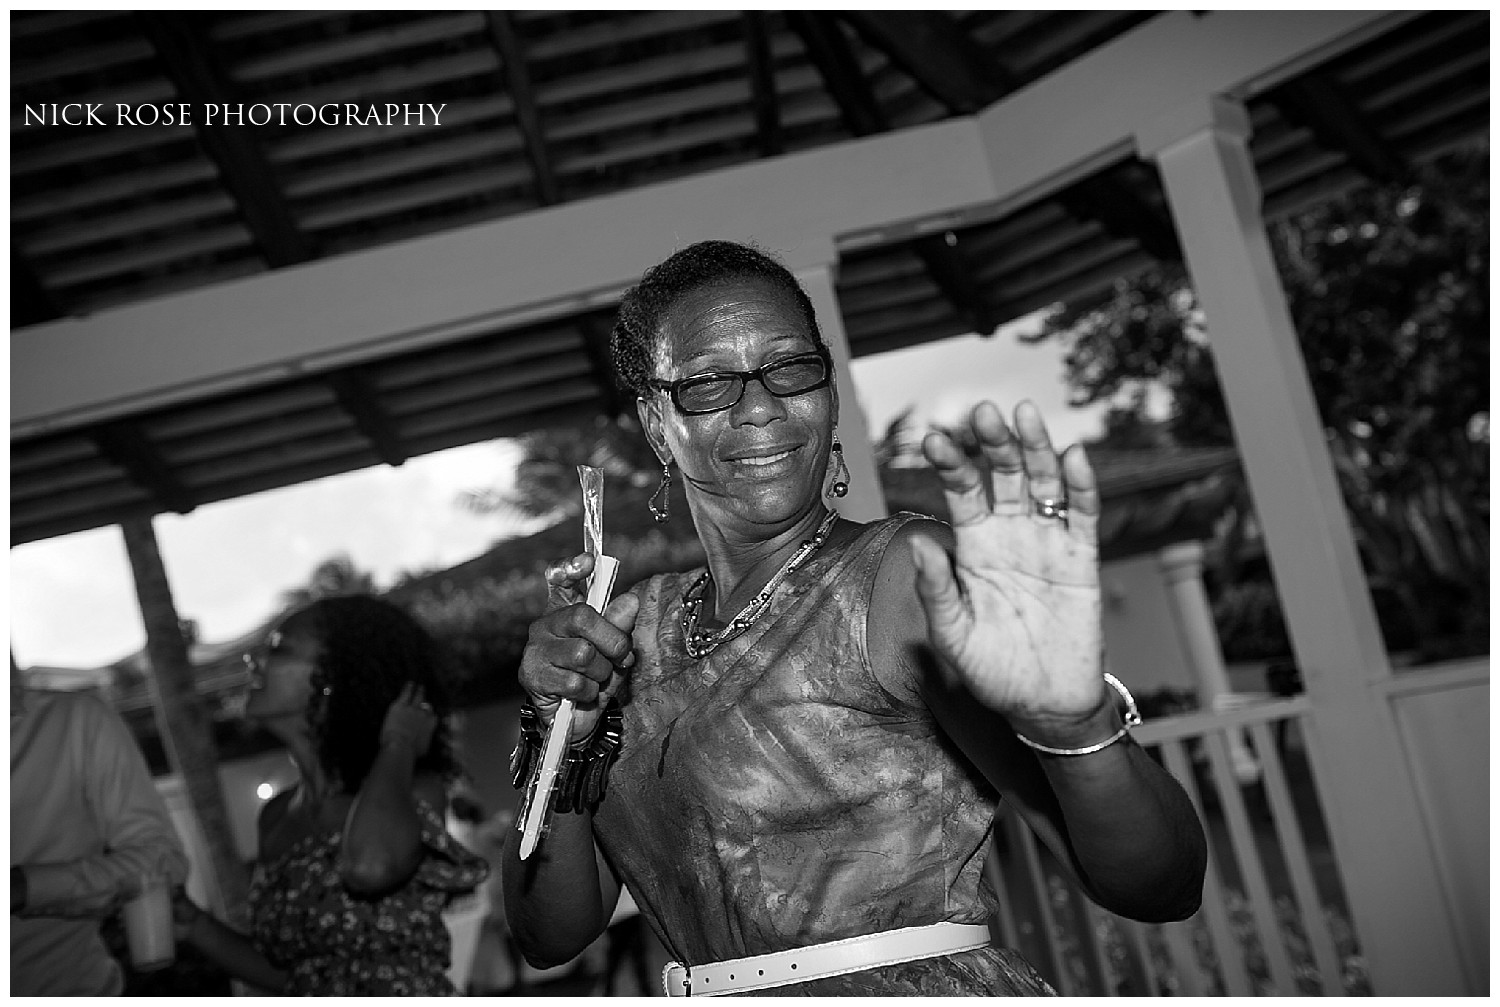 St Lucia Destination Wedding Photographer